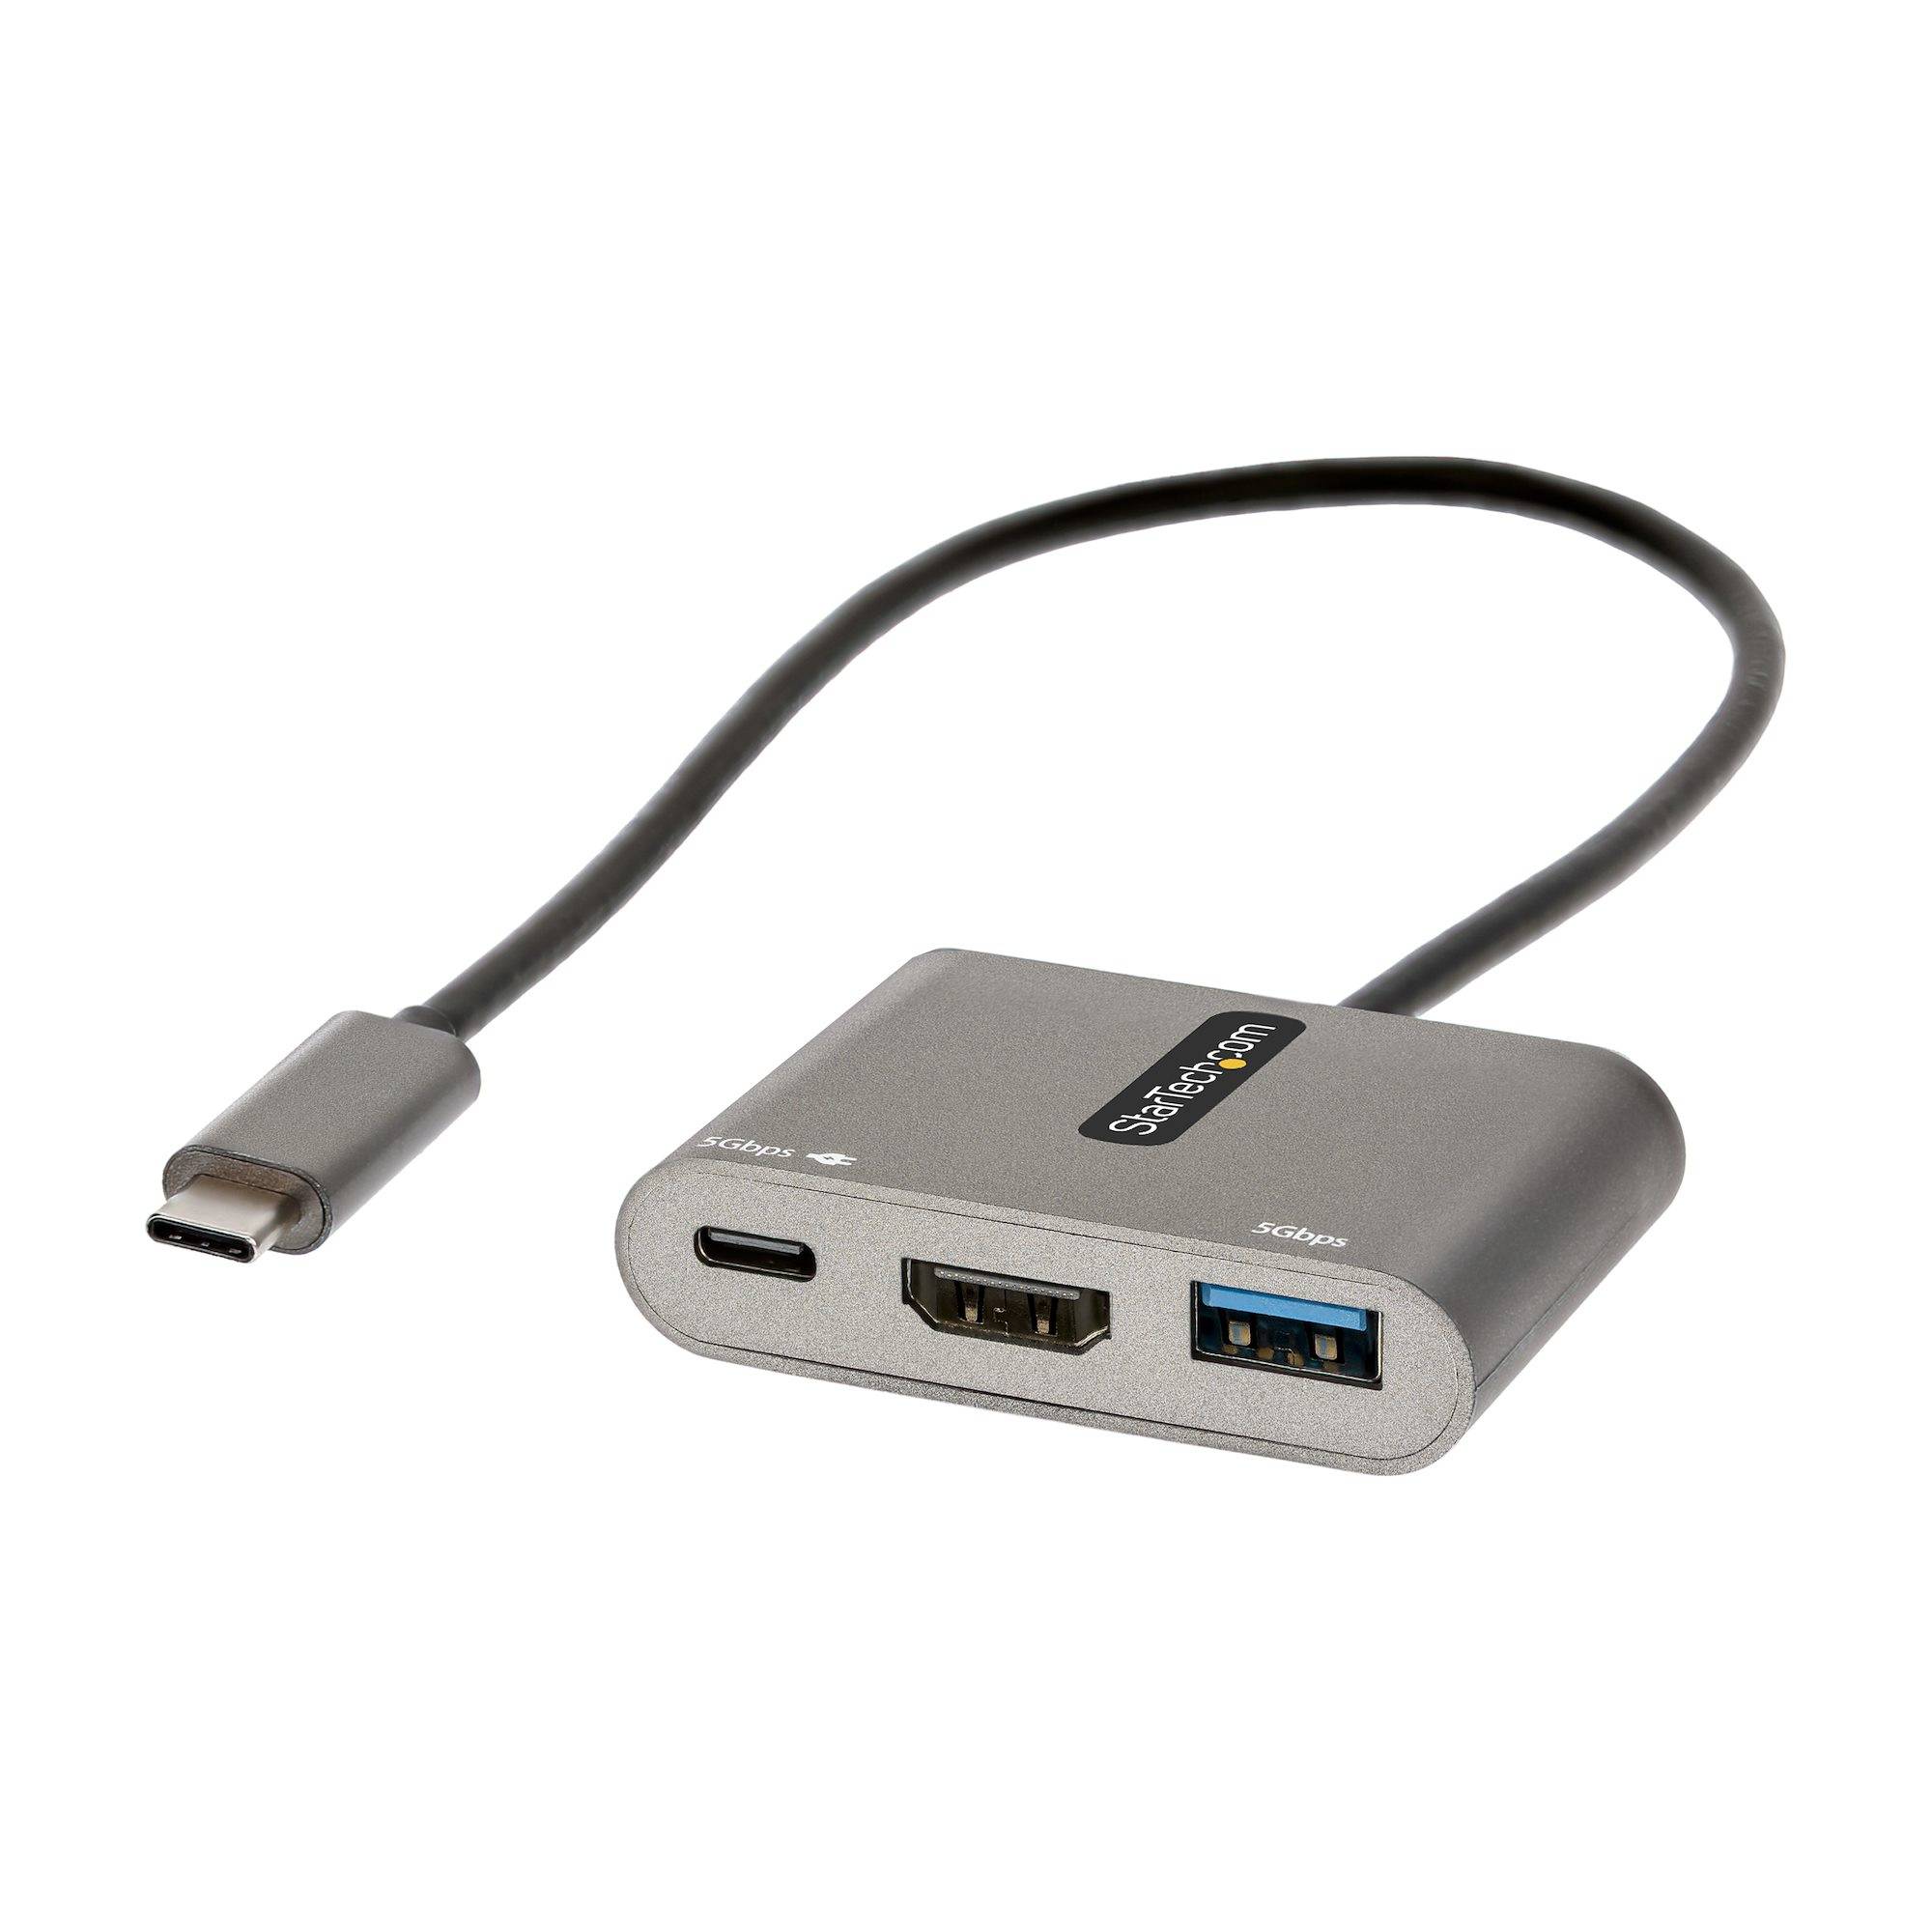 Rca Informatique - Image du produit : USB C MULTIPORT ADAPTER USB-C TO HDMI 4K PD 3.0 USB 3.0 HUB